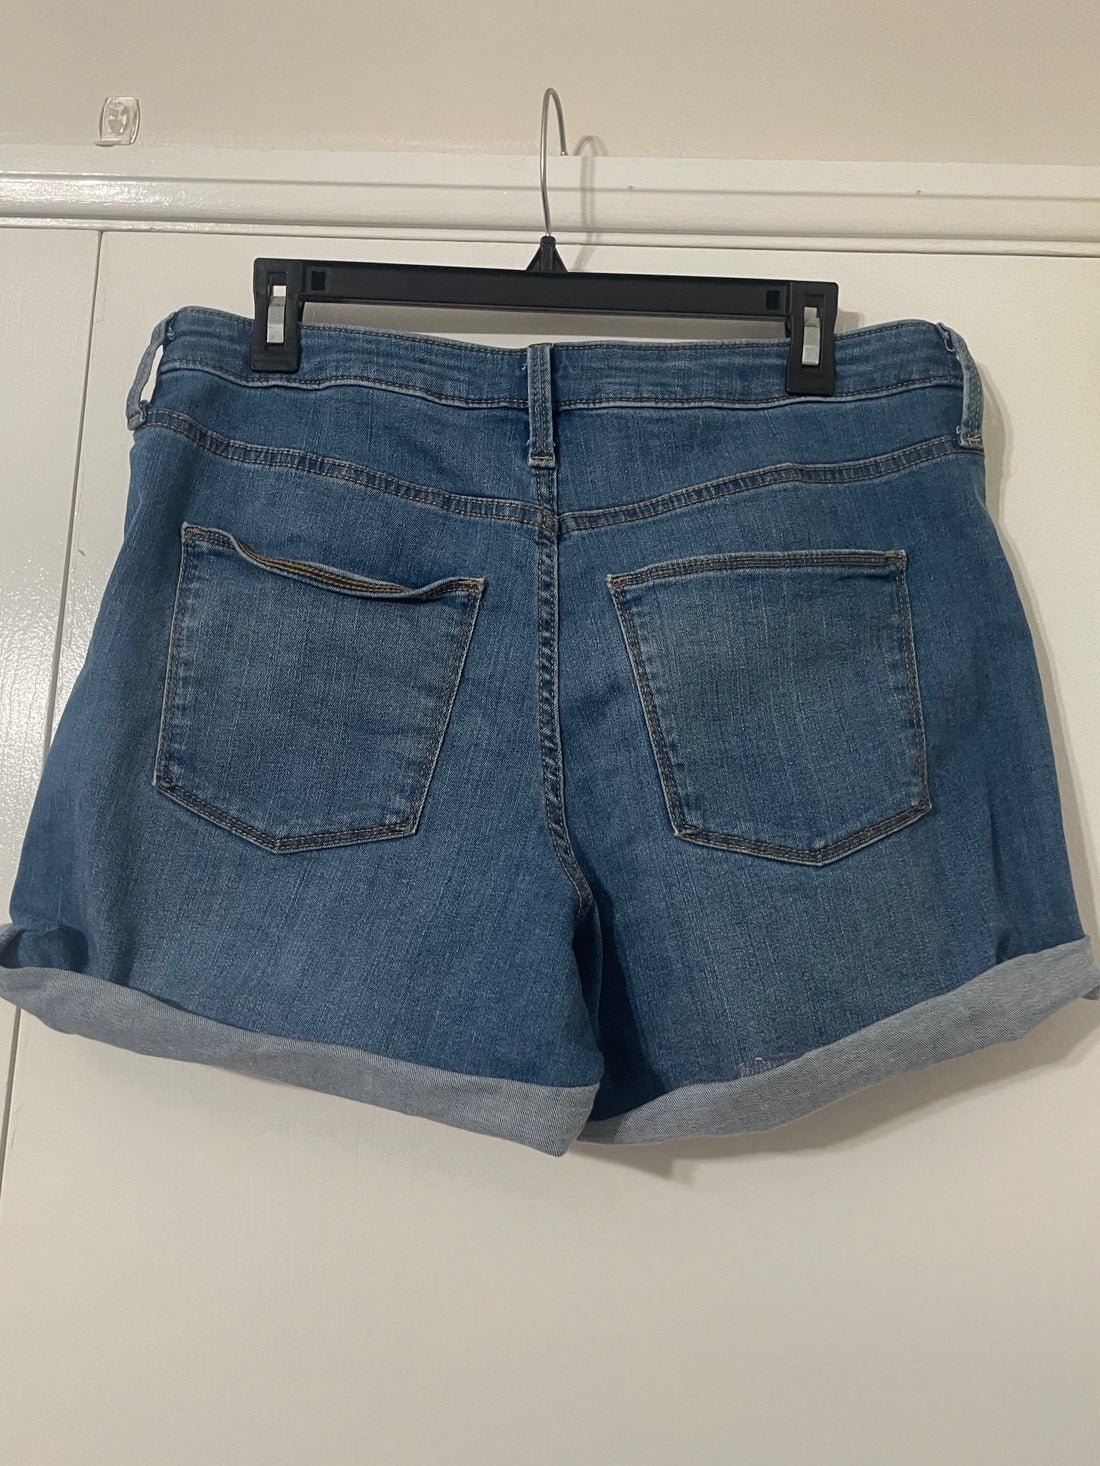 Classic Women’s Universal Thread Jean Shorts n6tGP73mG best sale